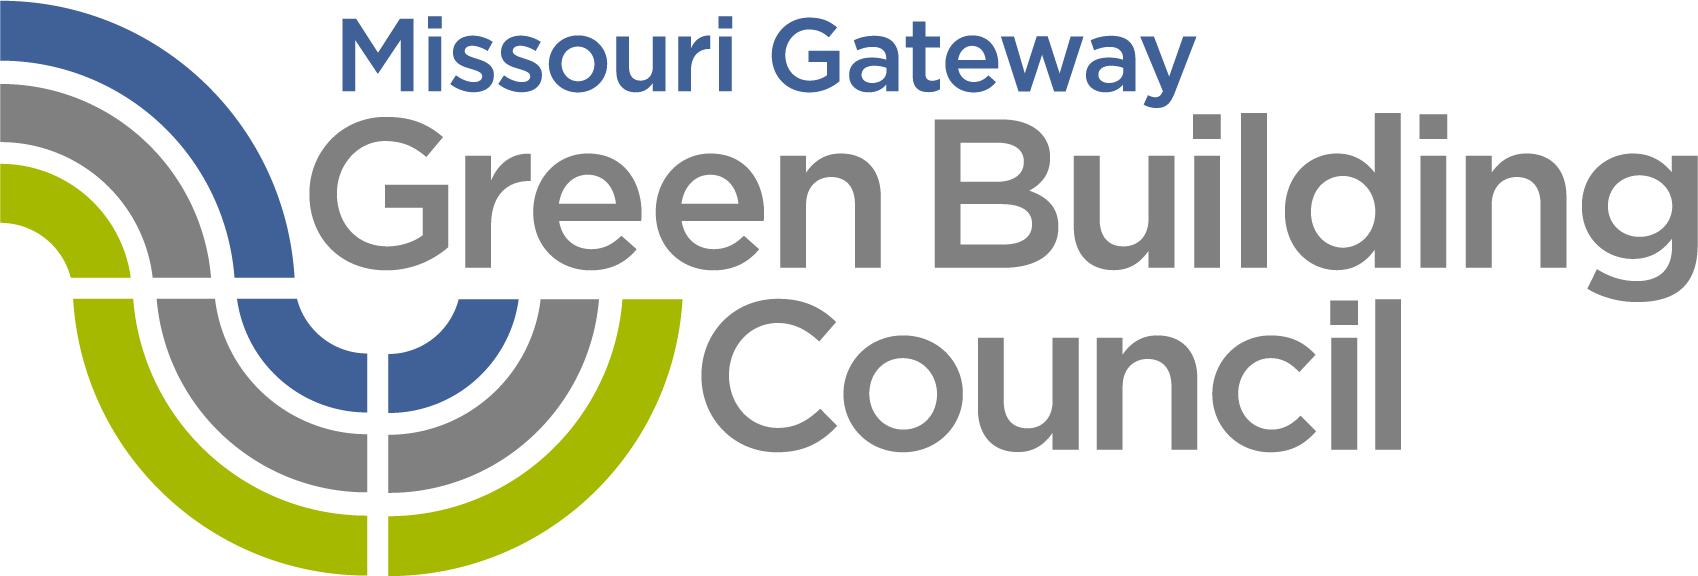 Missouri Gateway Green Building Council Logo